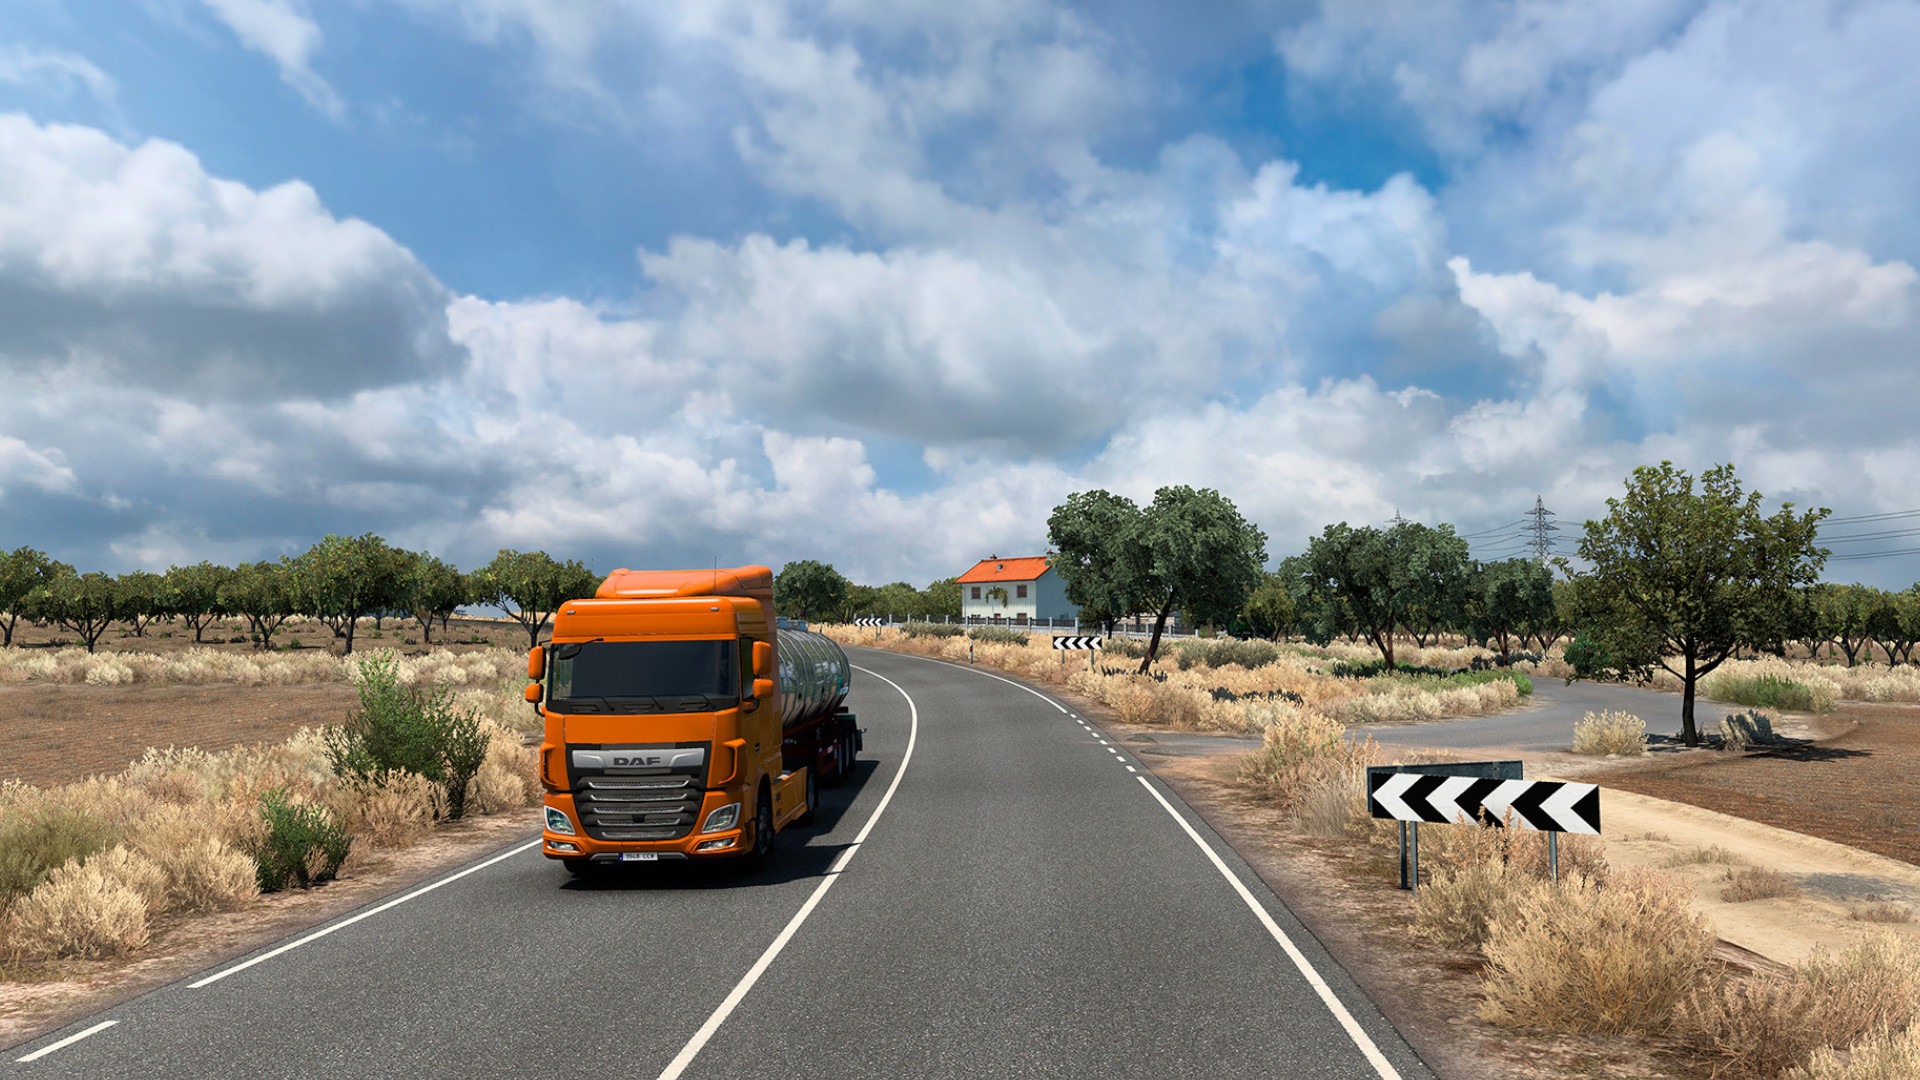 https://www.pcgamesn.com/wp-content/sites/pcgamesn/2021/09/euro-truck-simulator-2-iberia-road-update.jpg